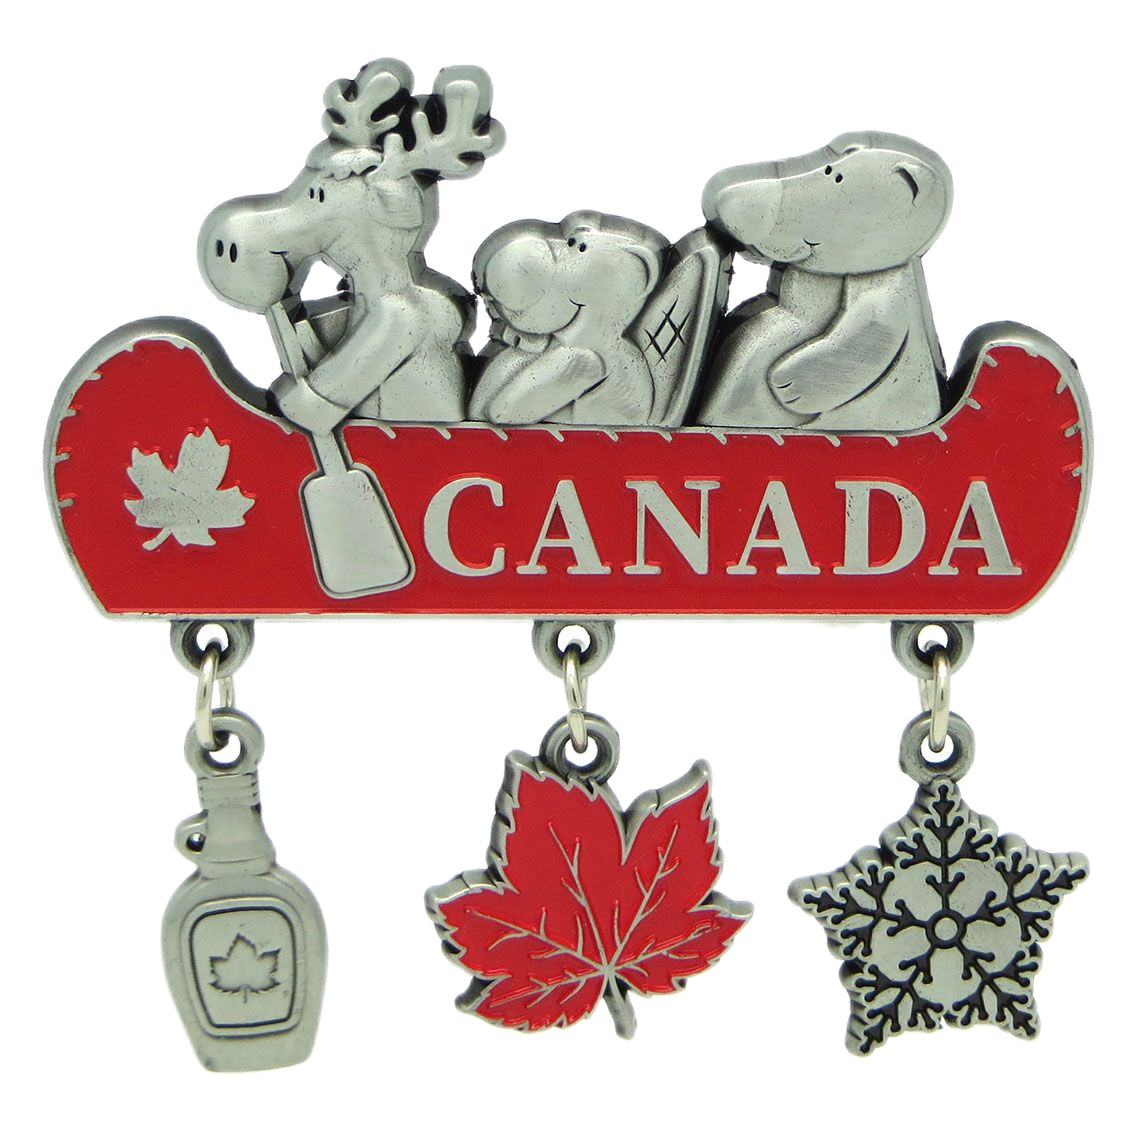 Canada Souvenir Magnets Cute Animals